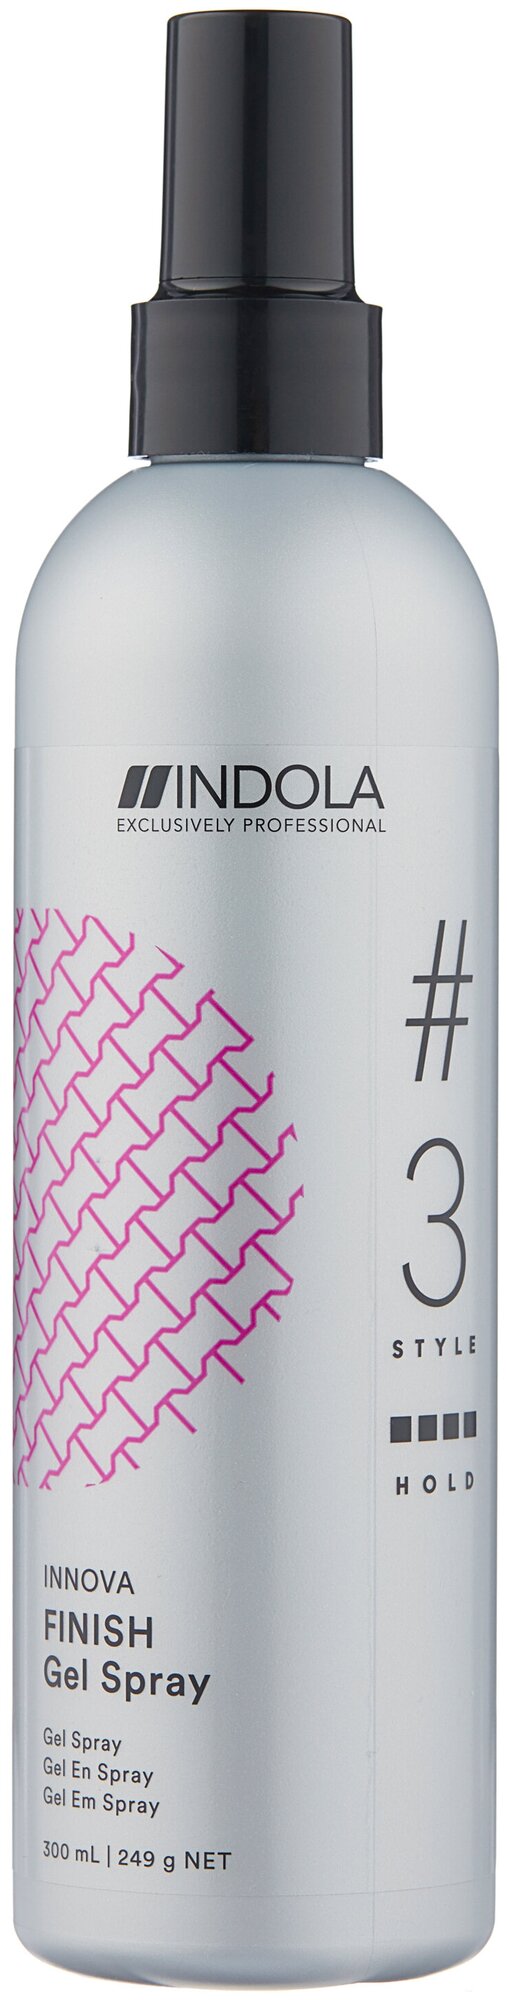 Indola finish gel spray Гель - спрей 300мл.